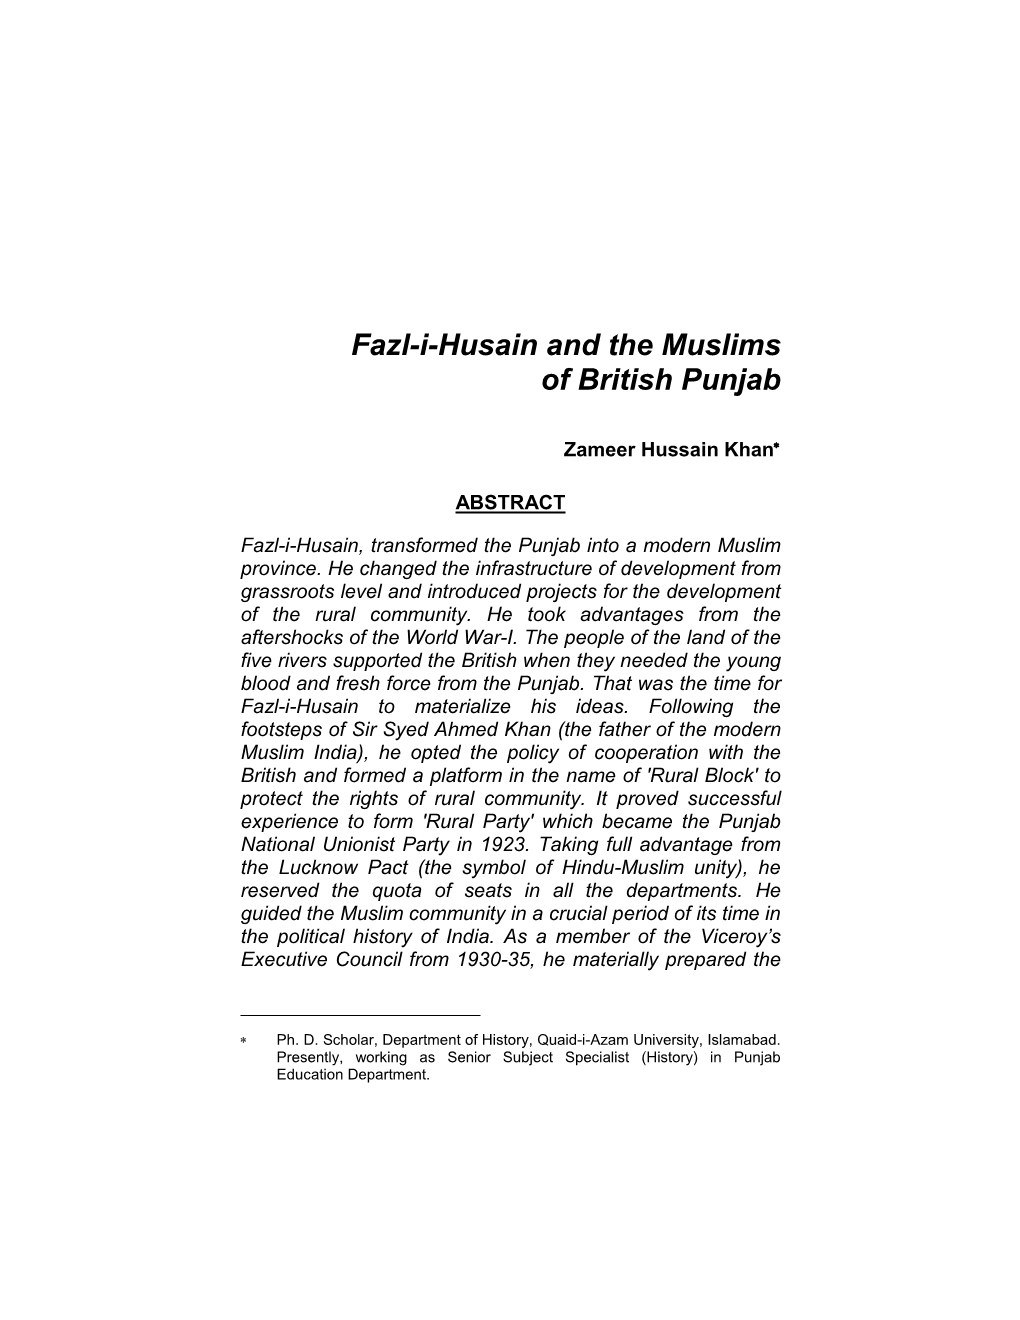 Fazl-I-Husain and the Muslims of British Punjab; Zameer Hussain Khan